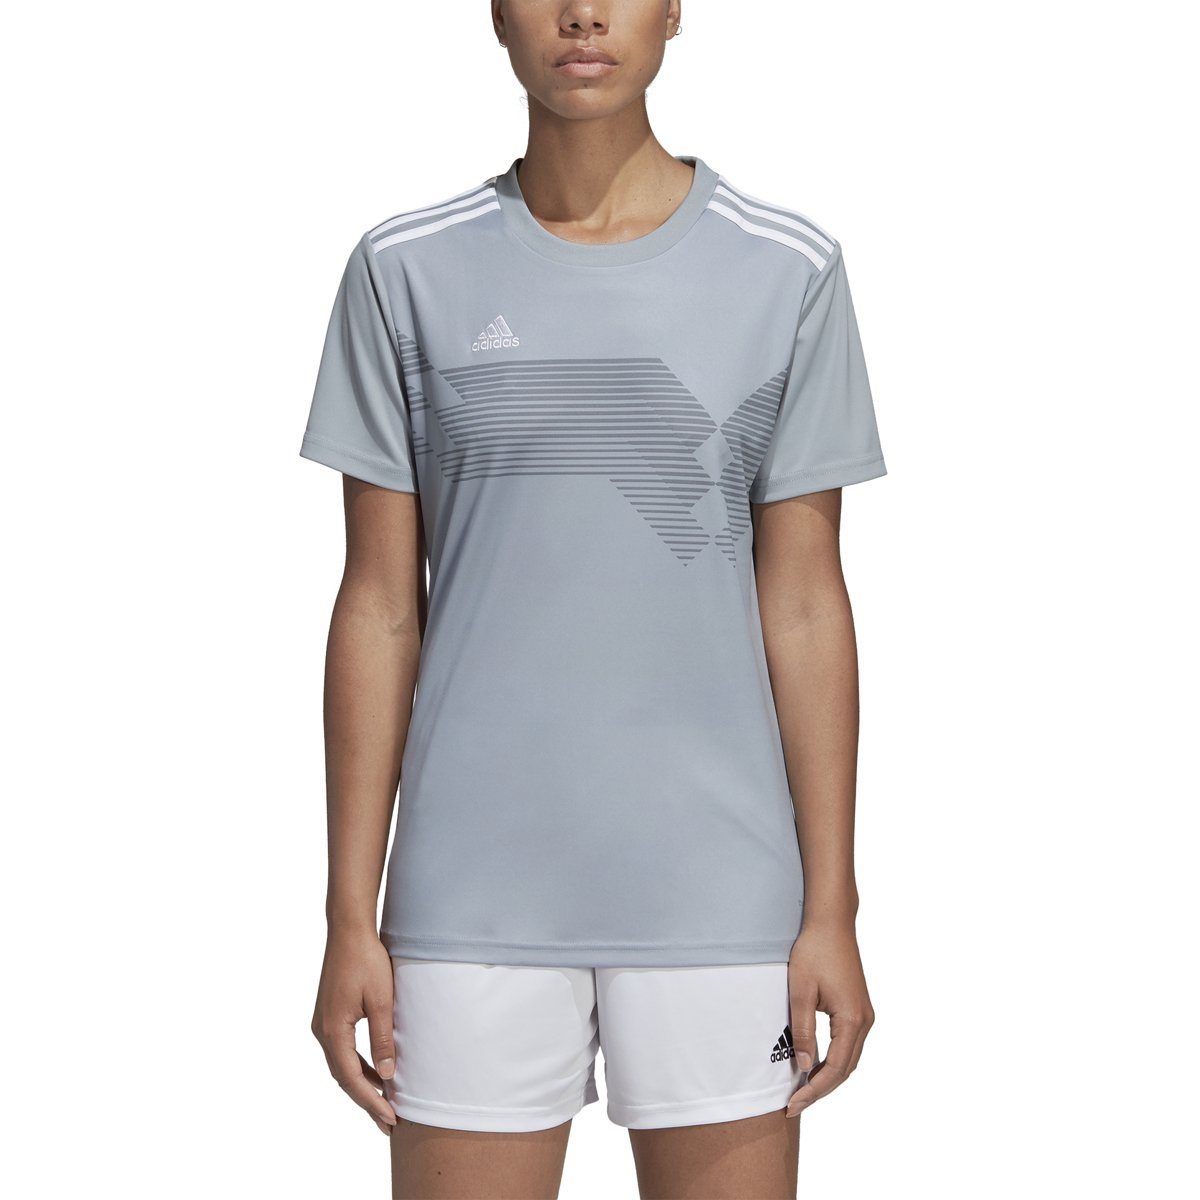 adidas Women's Campeon 19 Jersey | DP3153 Soccer Apparel adidas XXS light grey/white 